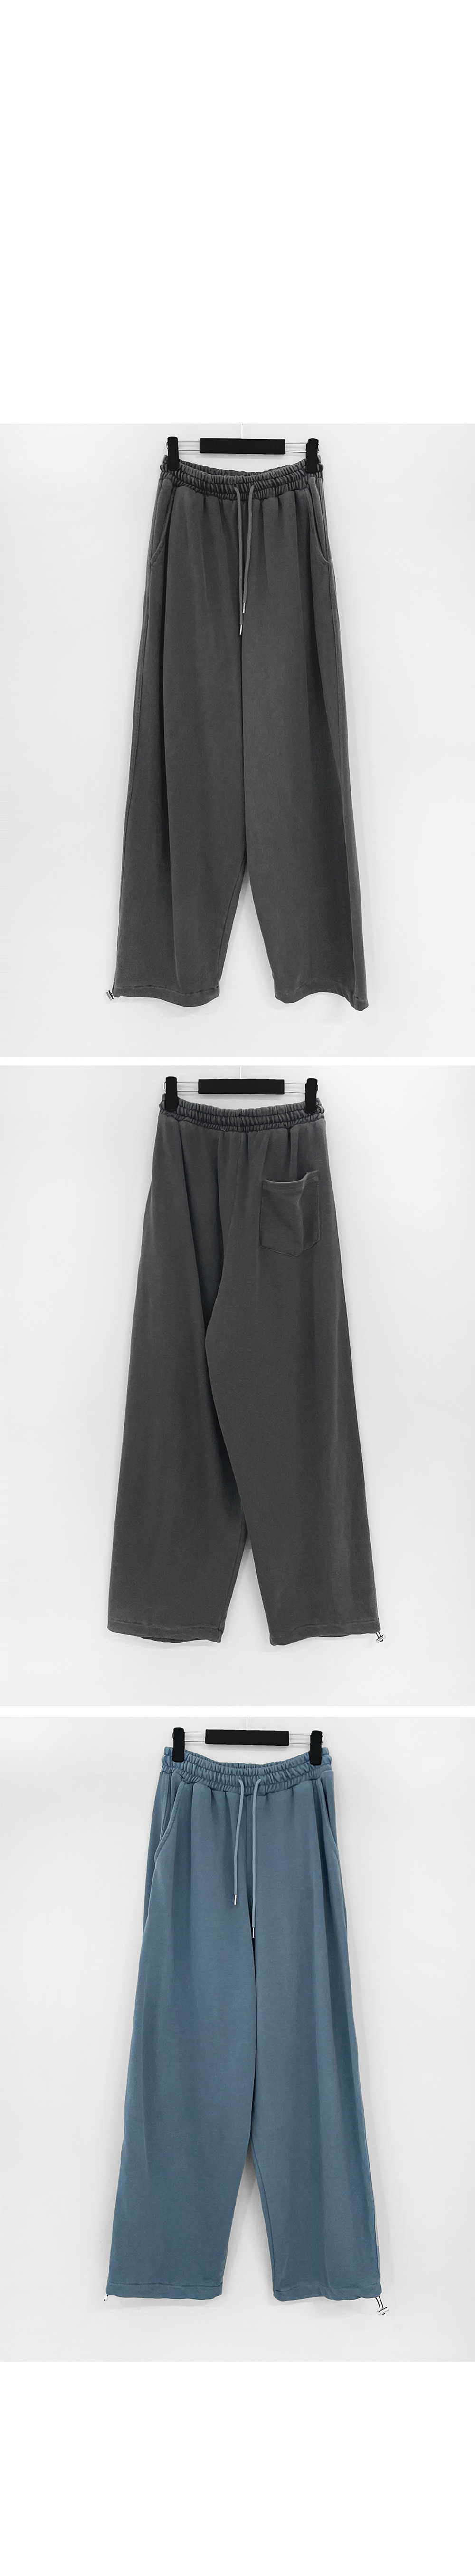 mini skirt grey color image-S1L14